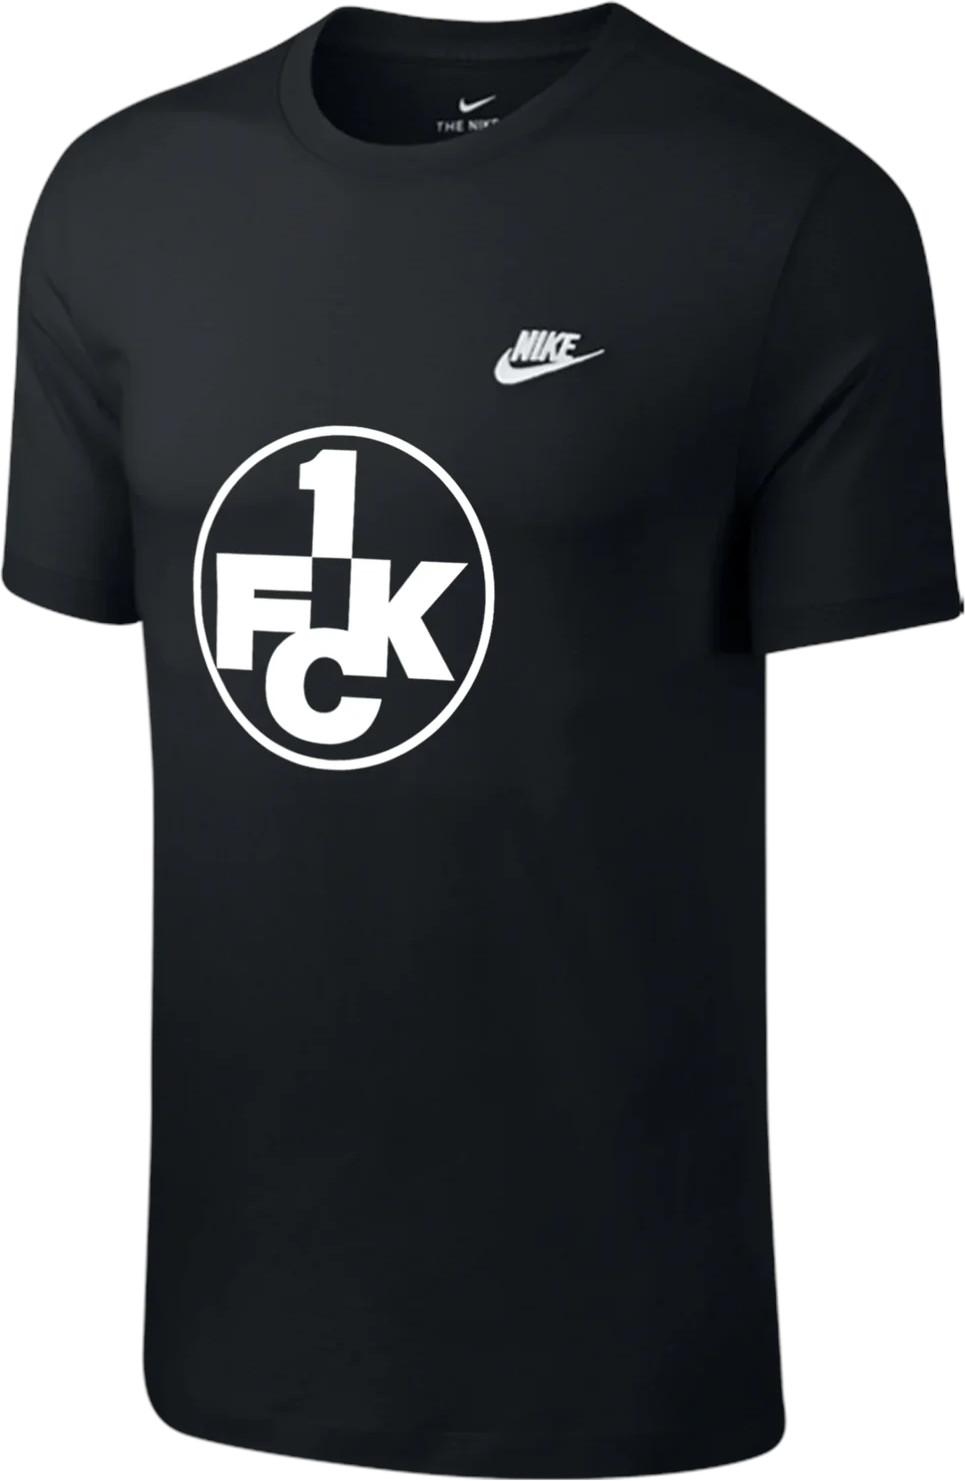 Majica Nike 1.FC Kaiserslautern Club Tee